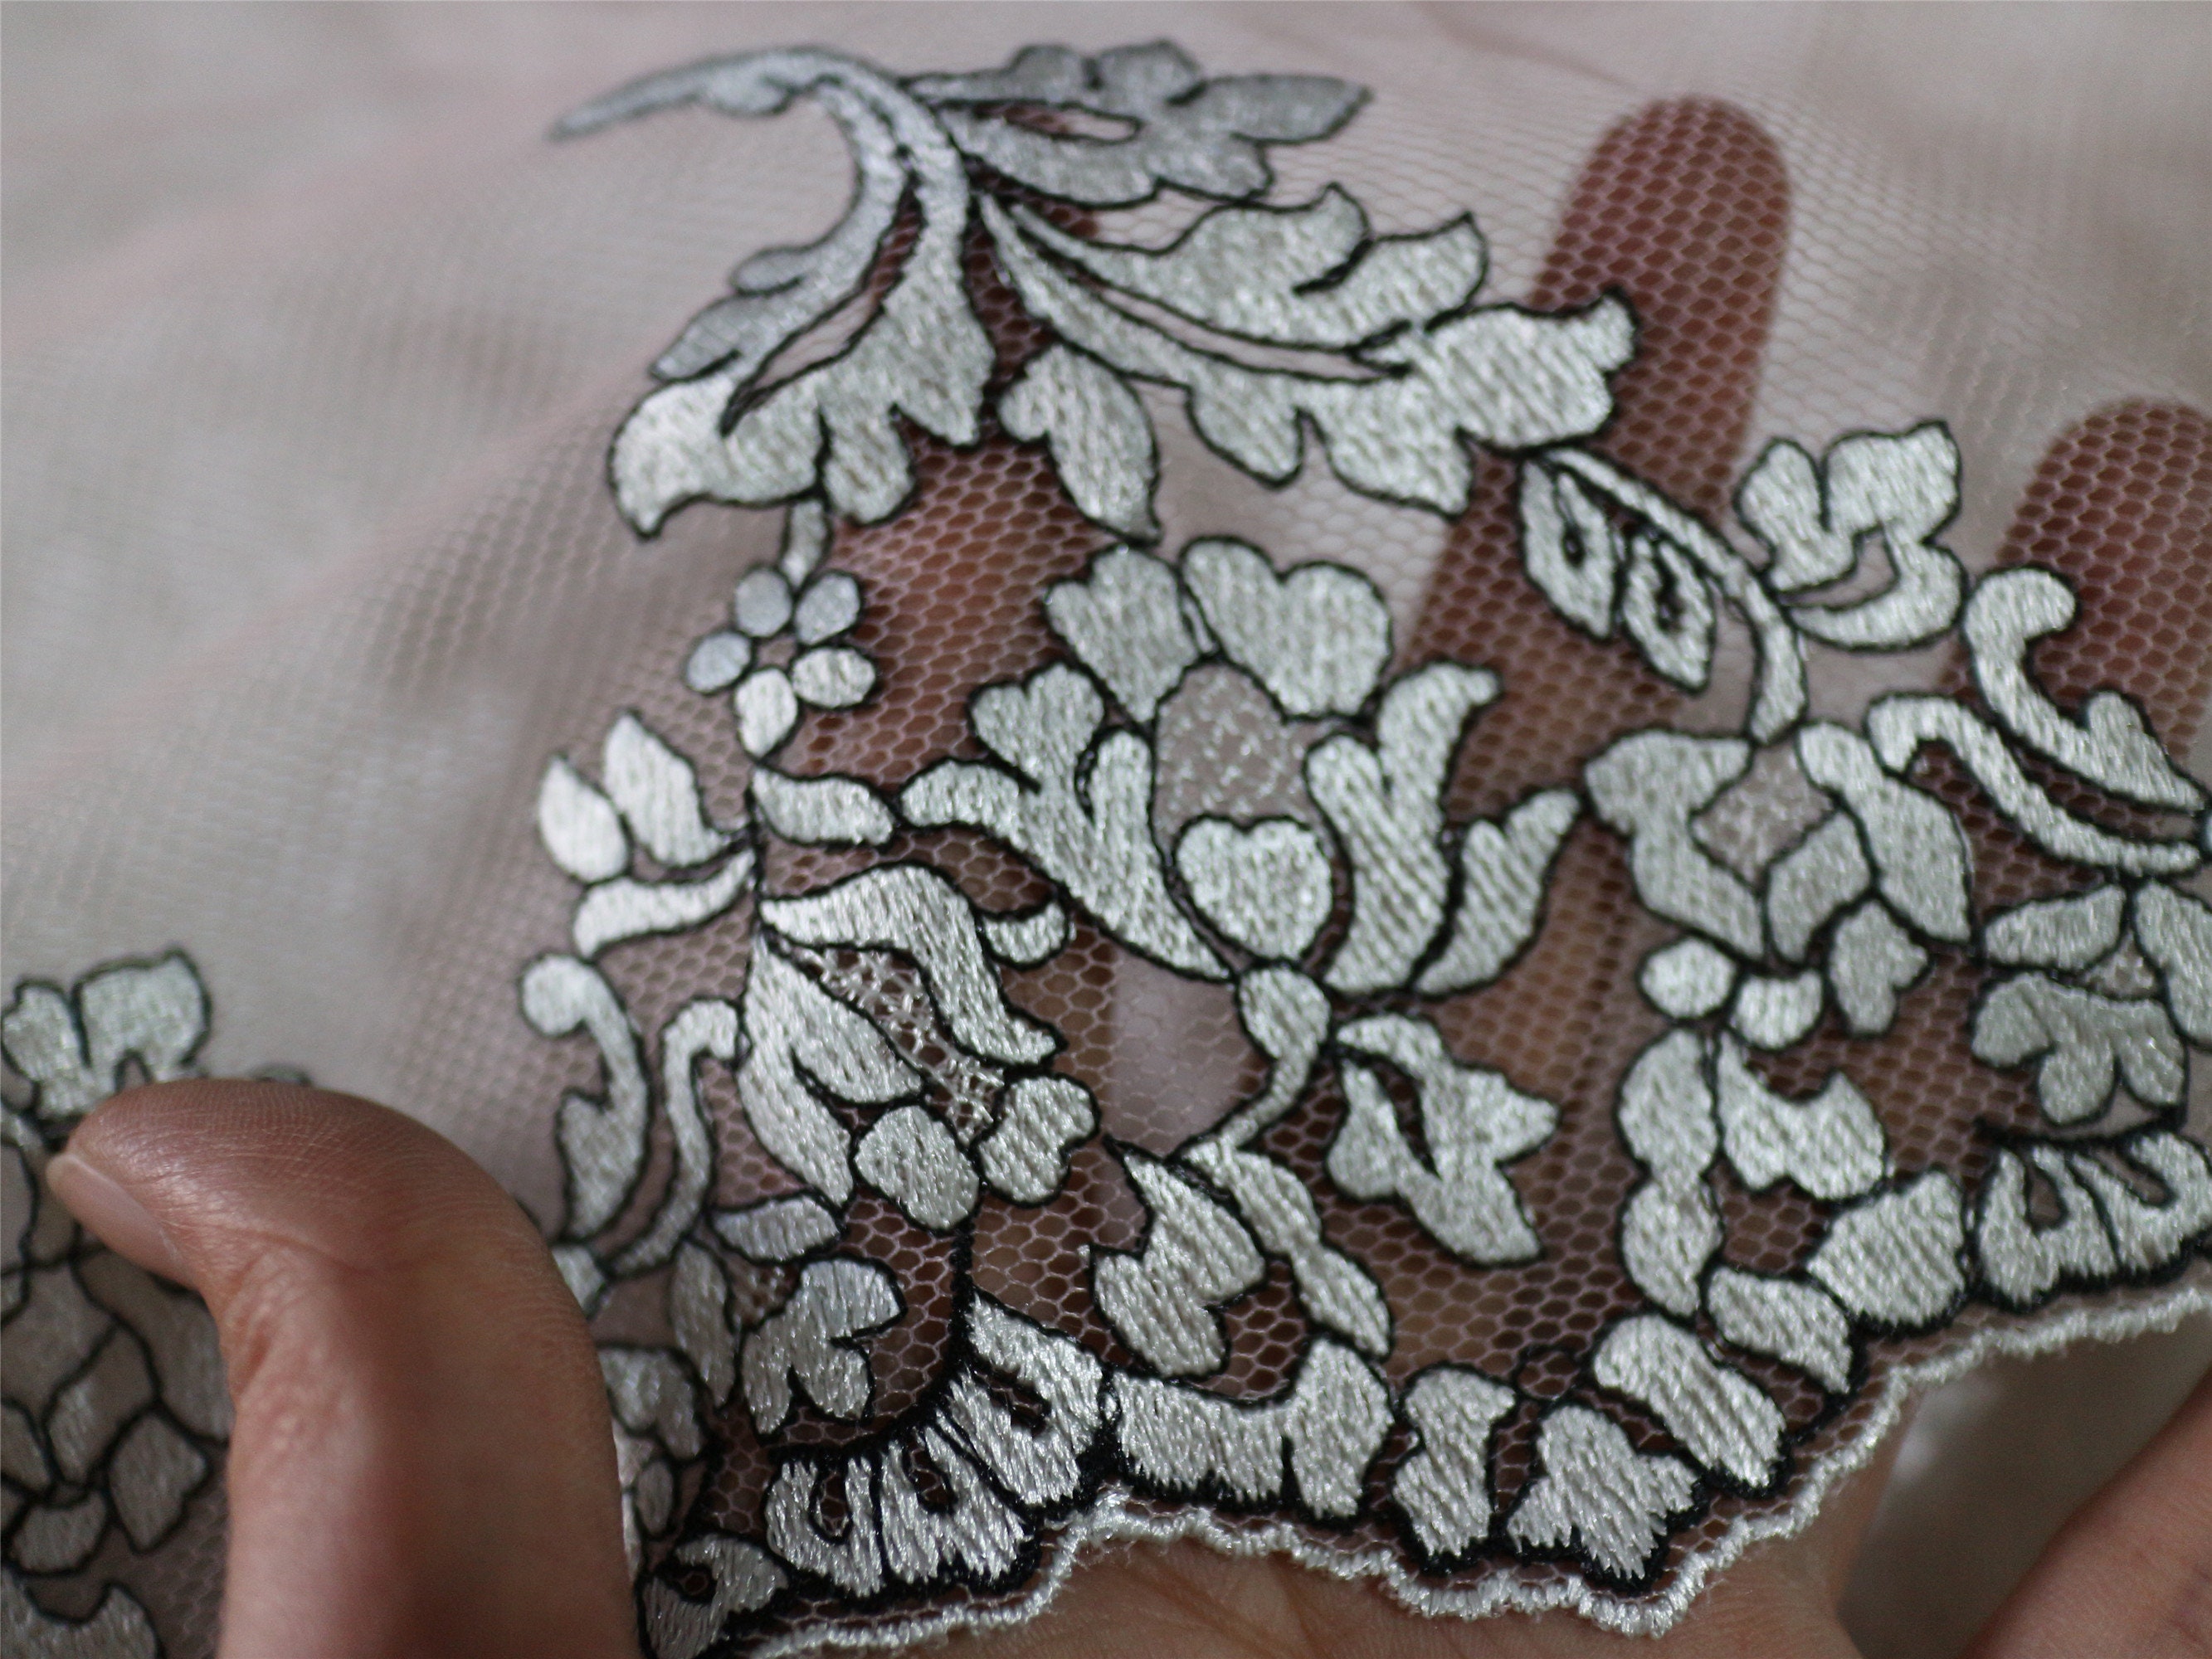 12cm,1 Yard Dress Skirt Handicrafts Embroidered Net Lace Trim Ribbon cotton FL03 